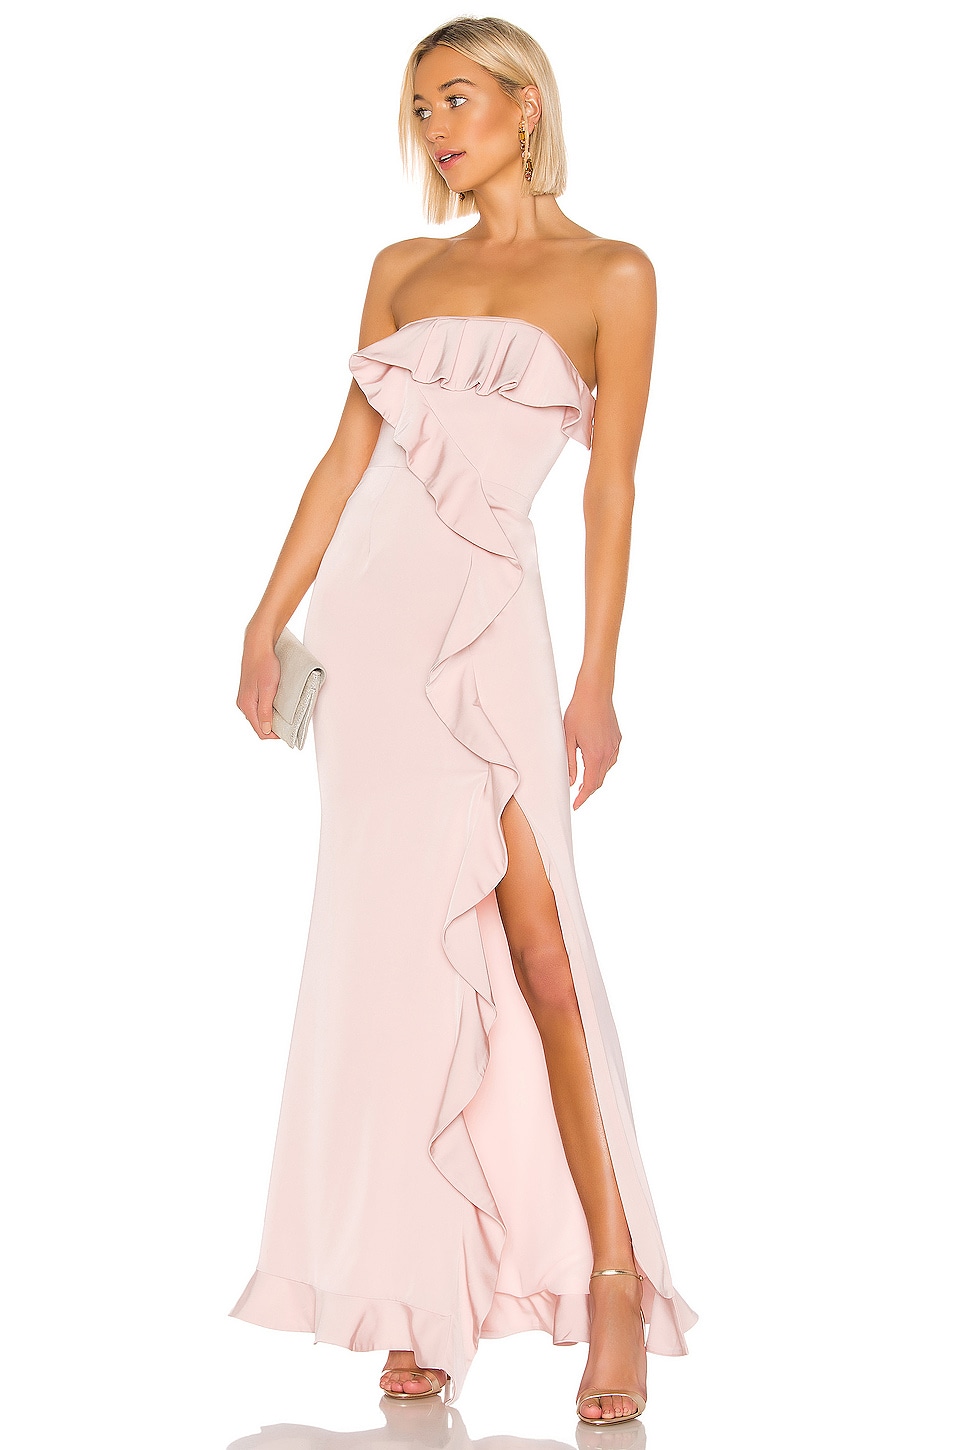 revolve pink strapless dress